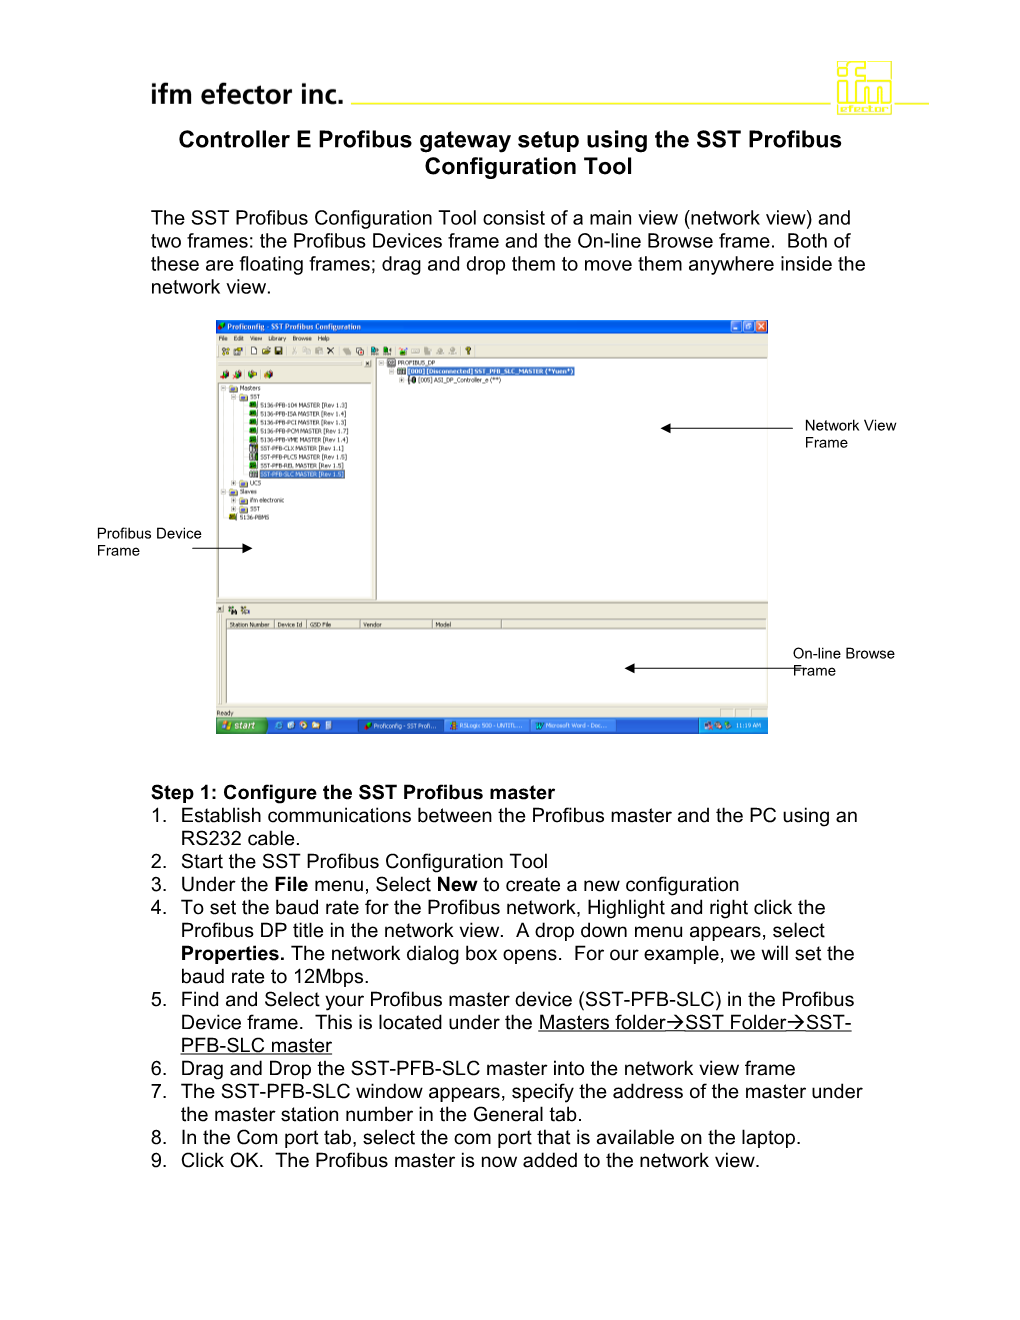 Controller E Profibus Gateway Setup Using the SST Profibus Configuration Tool